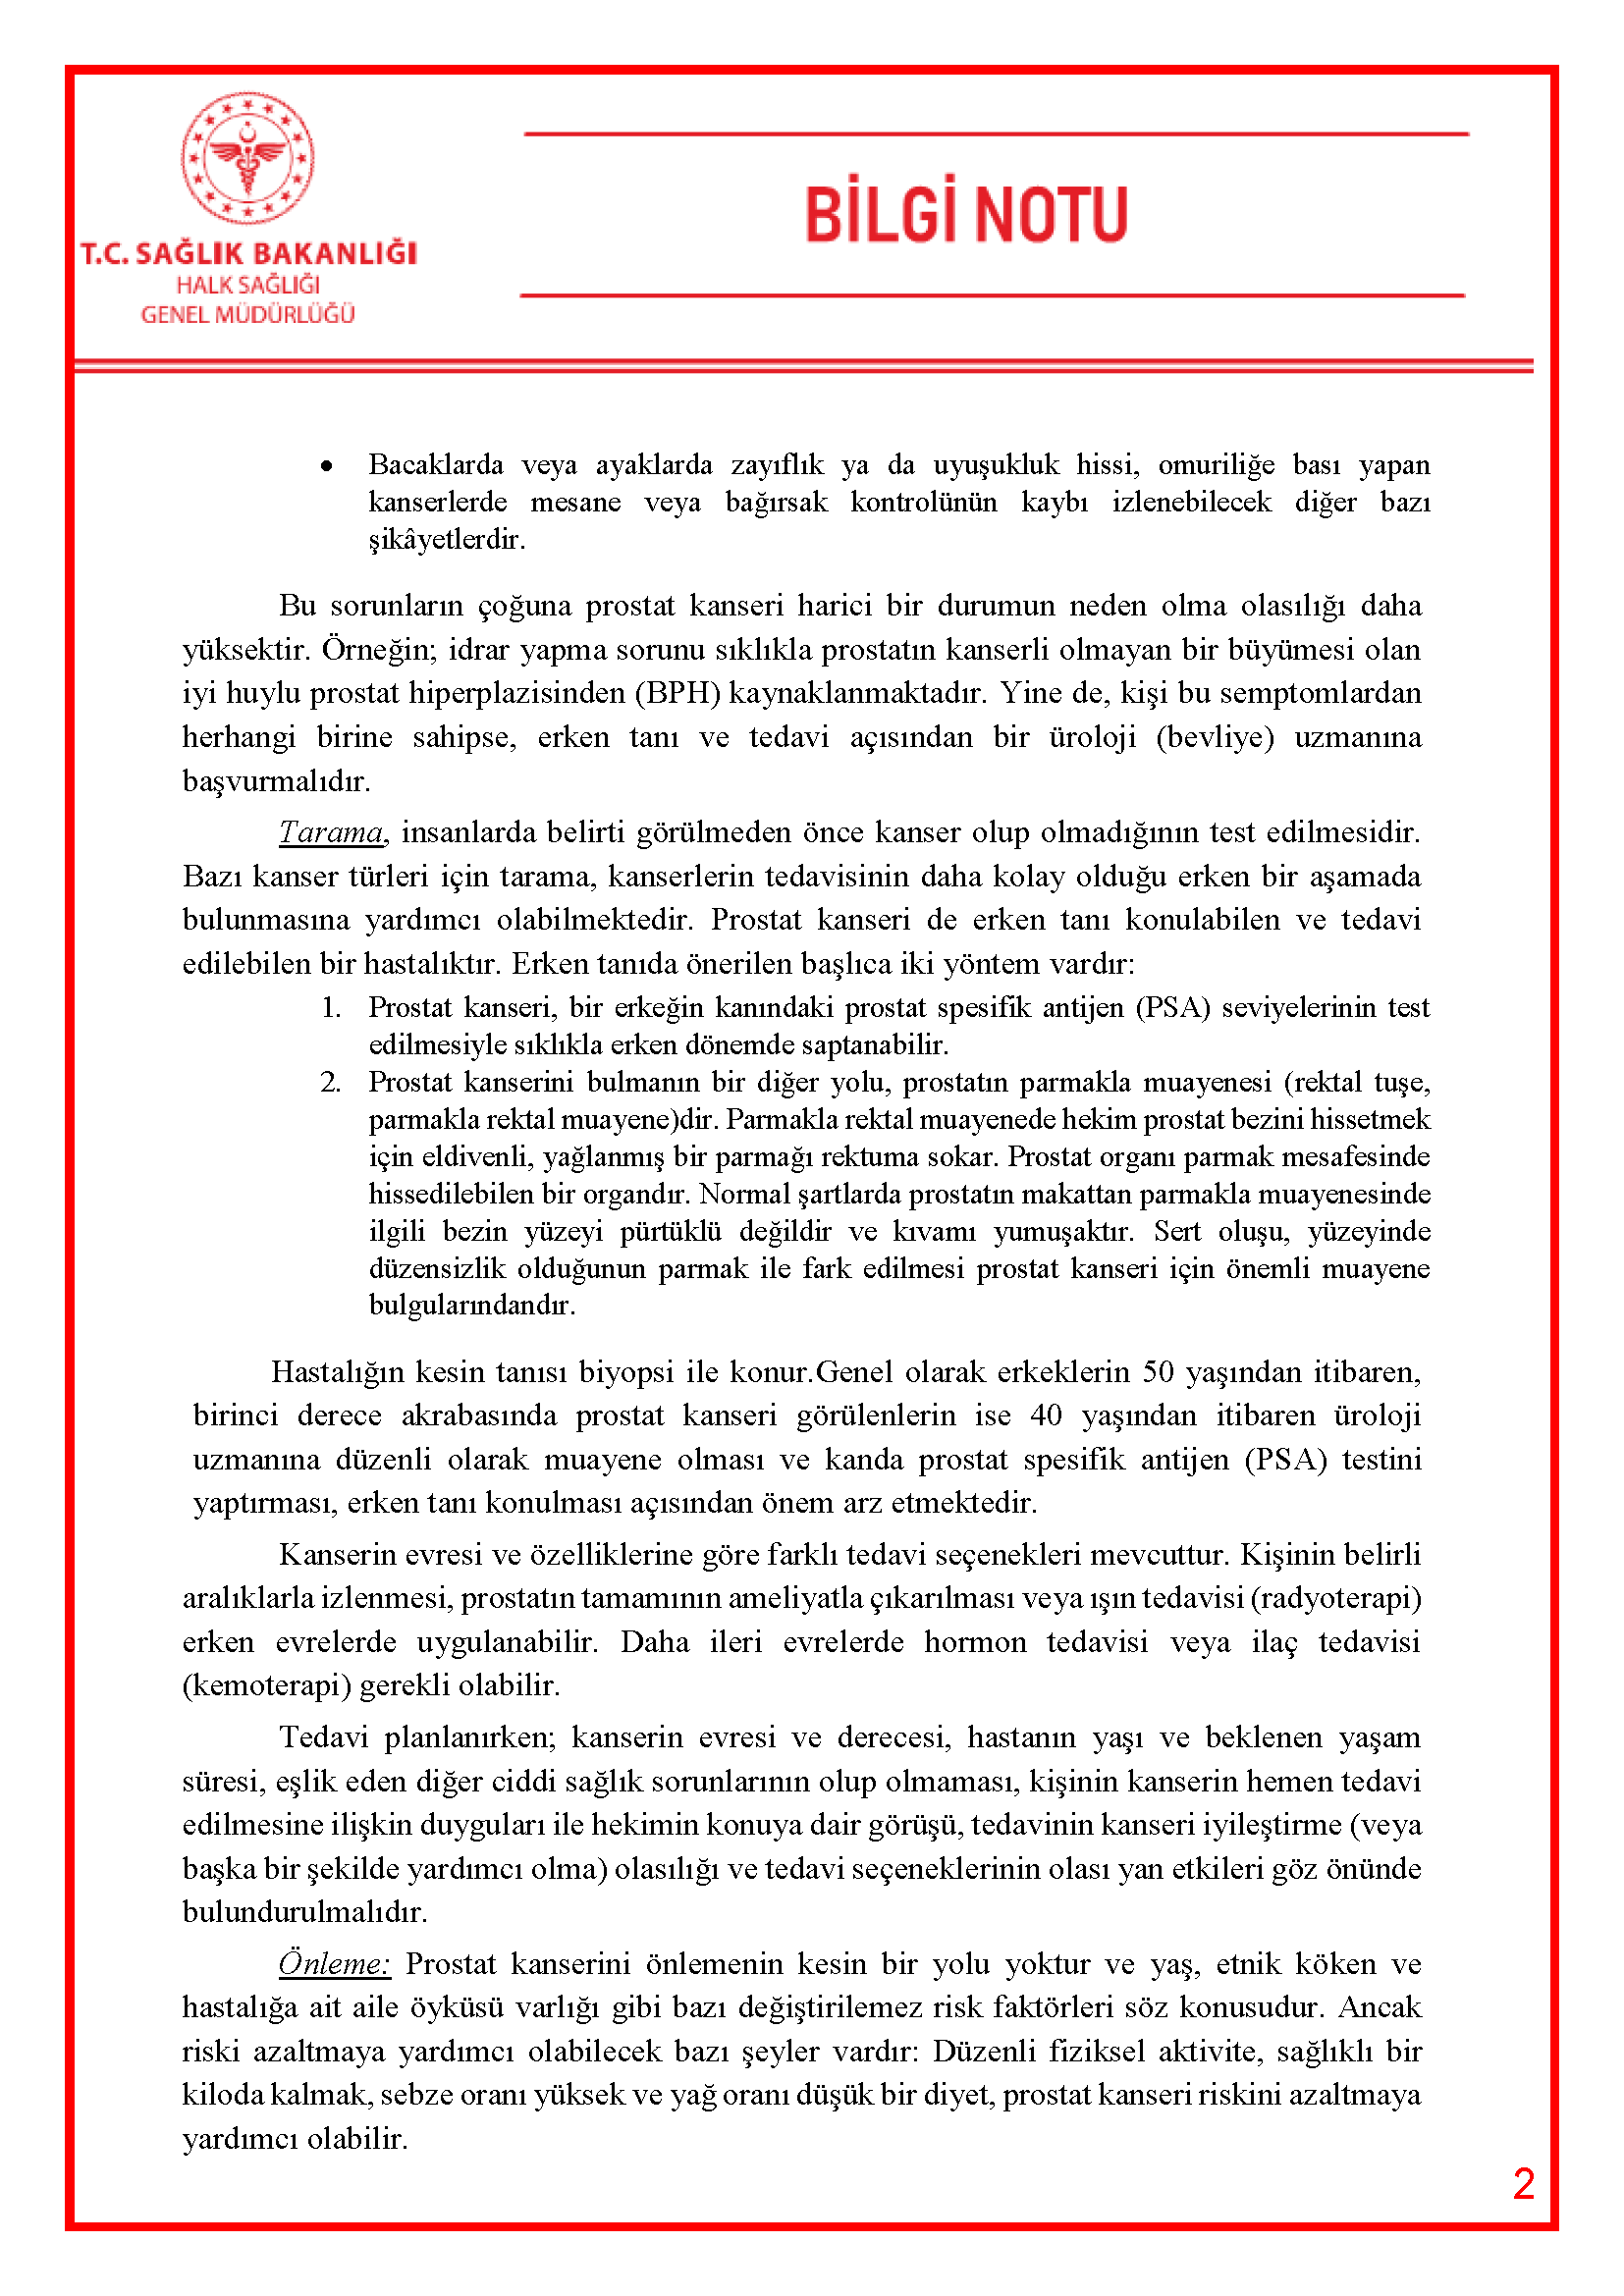 PROSTAT KANSERİ FARKINDALIK NOTU HSGM_Sayfa_2.png